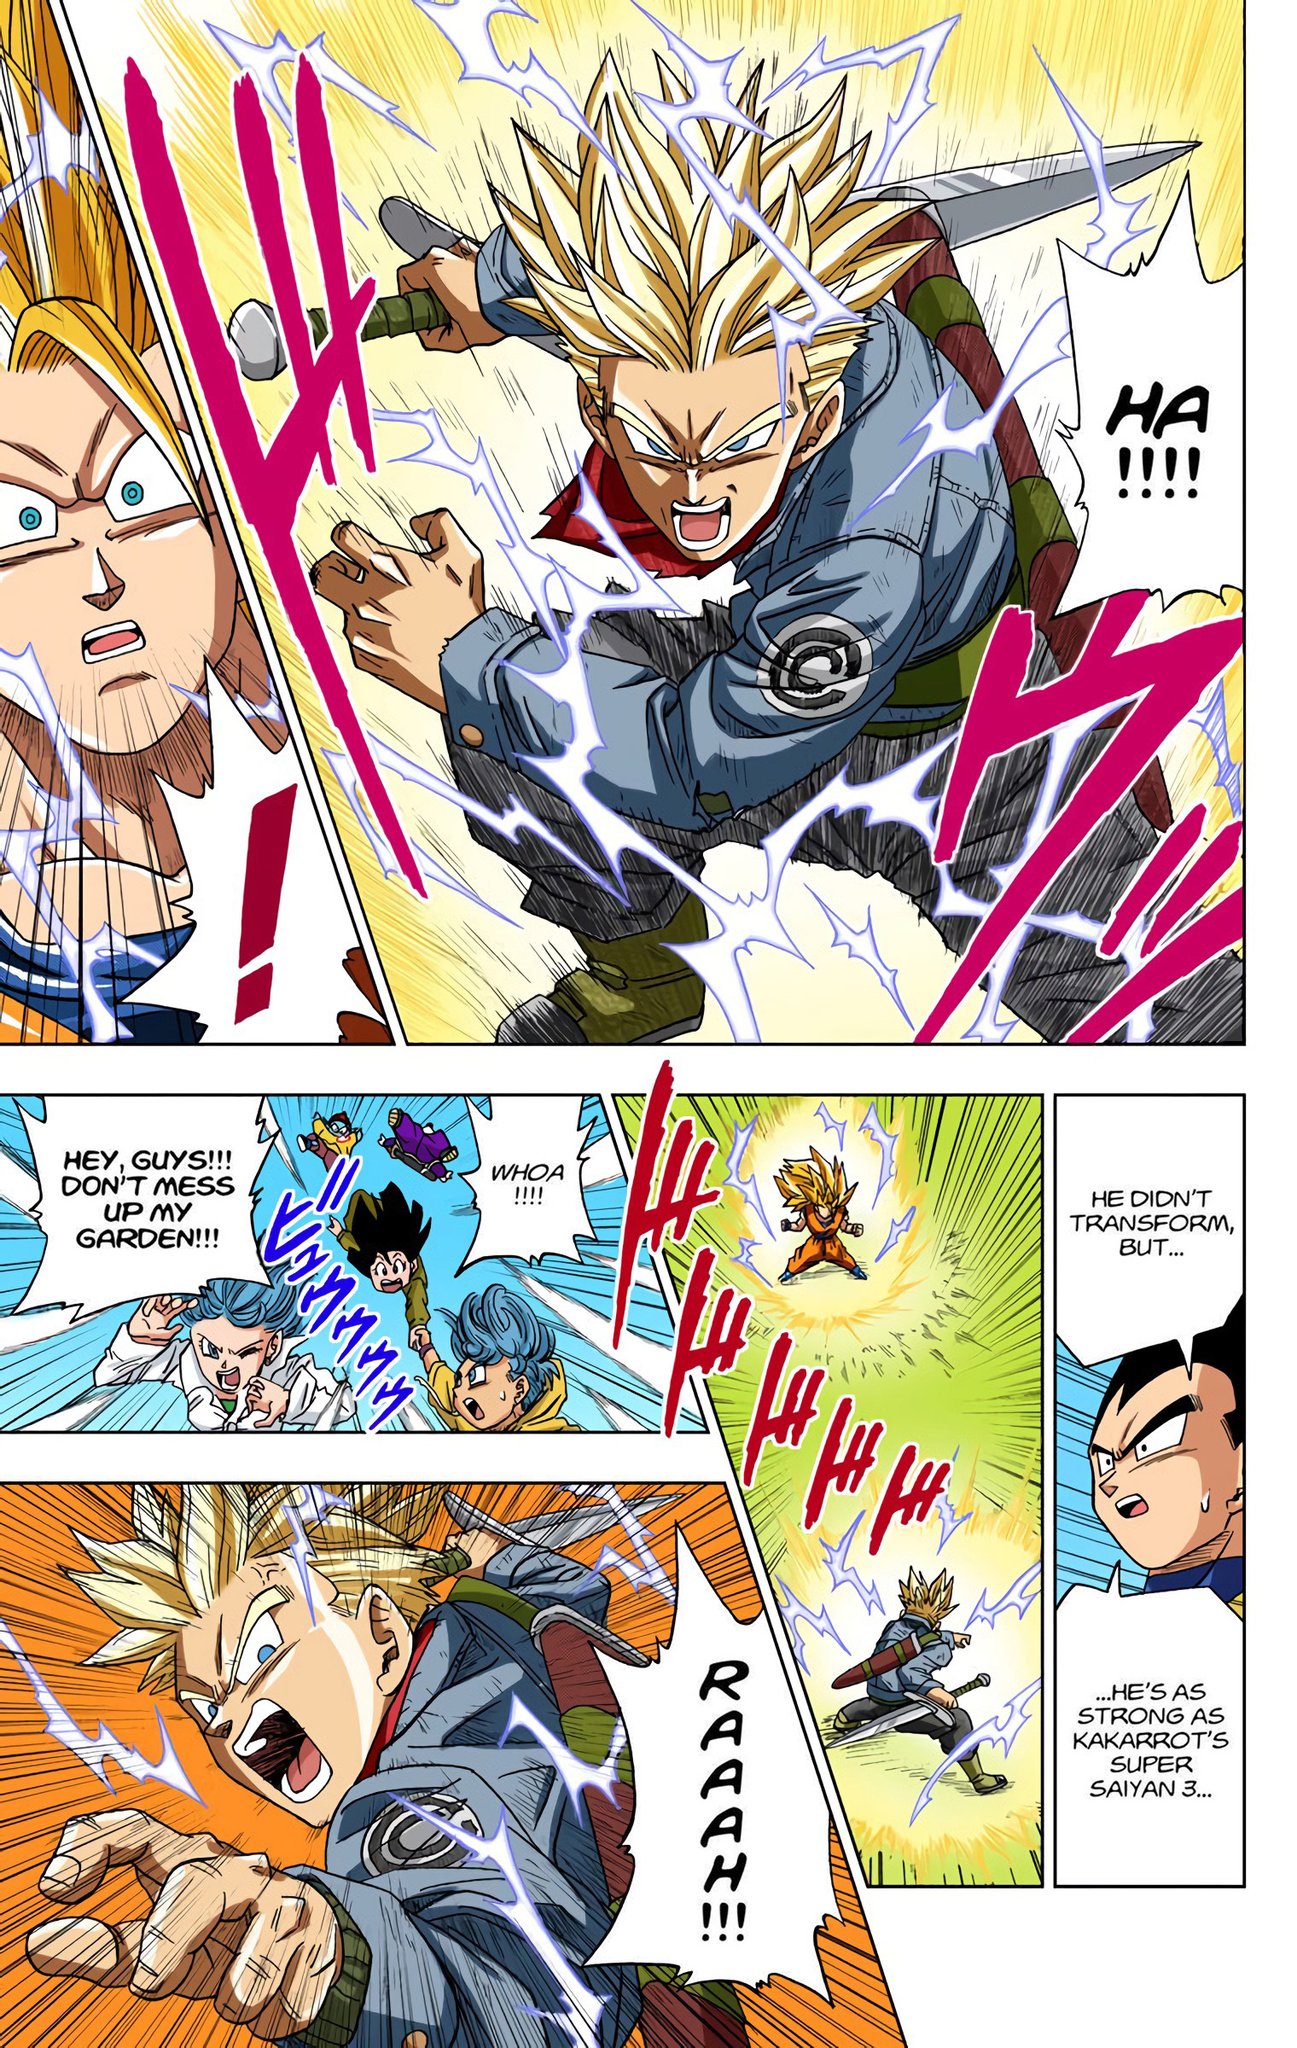 Trunks Futuro SSJ2 vs Dabura - Manga extra Dragon Ball Super a COLOR 